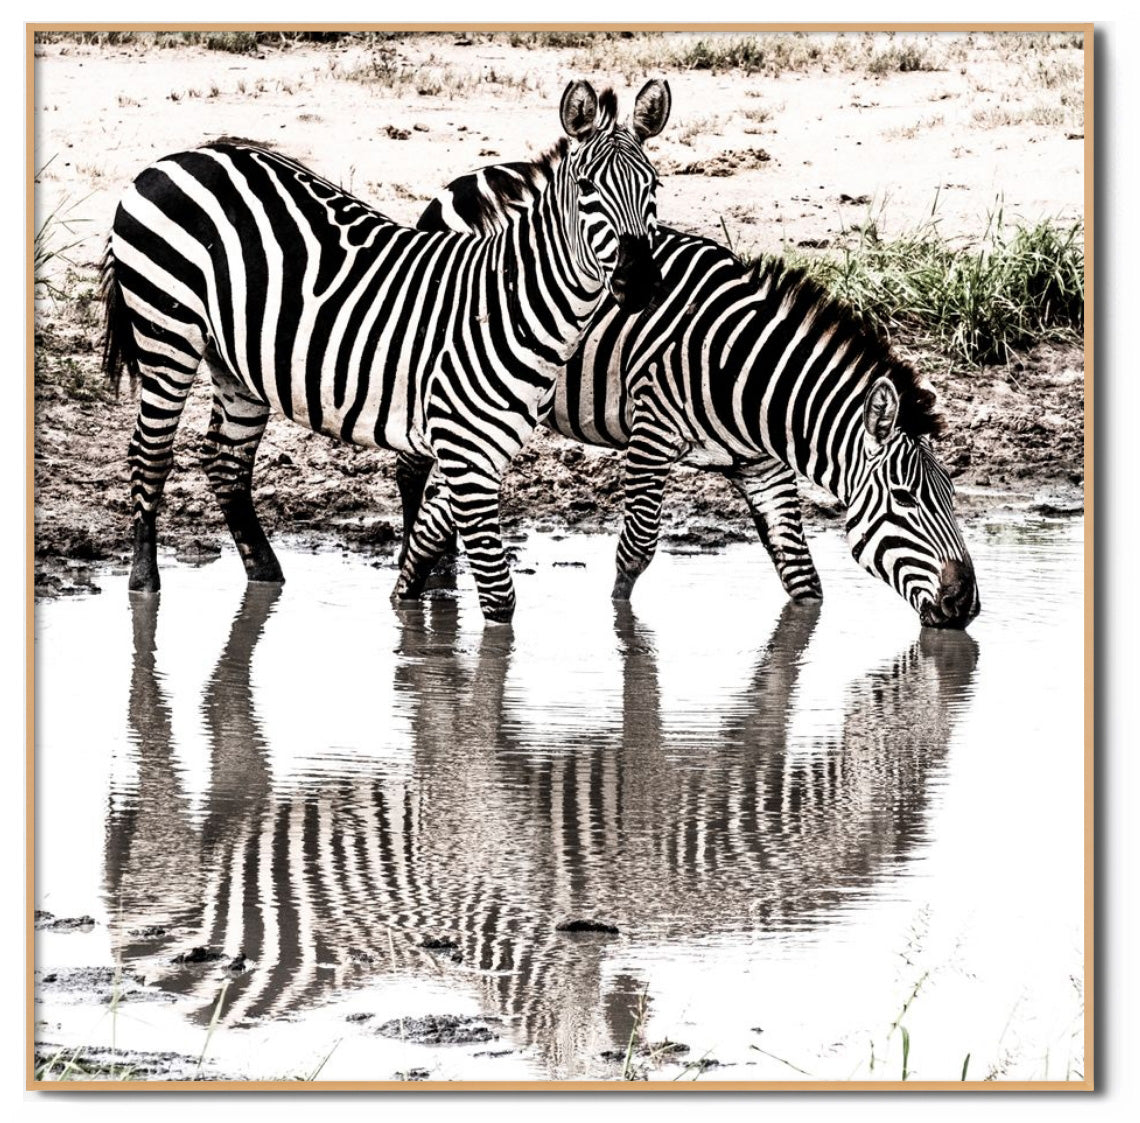 Zebras in water